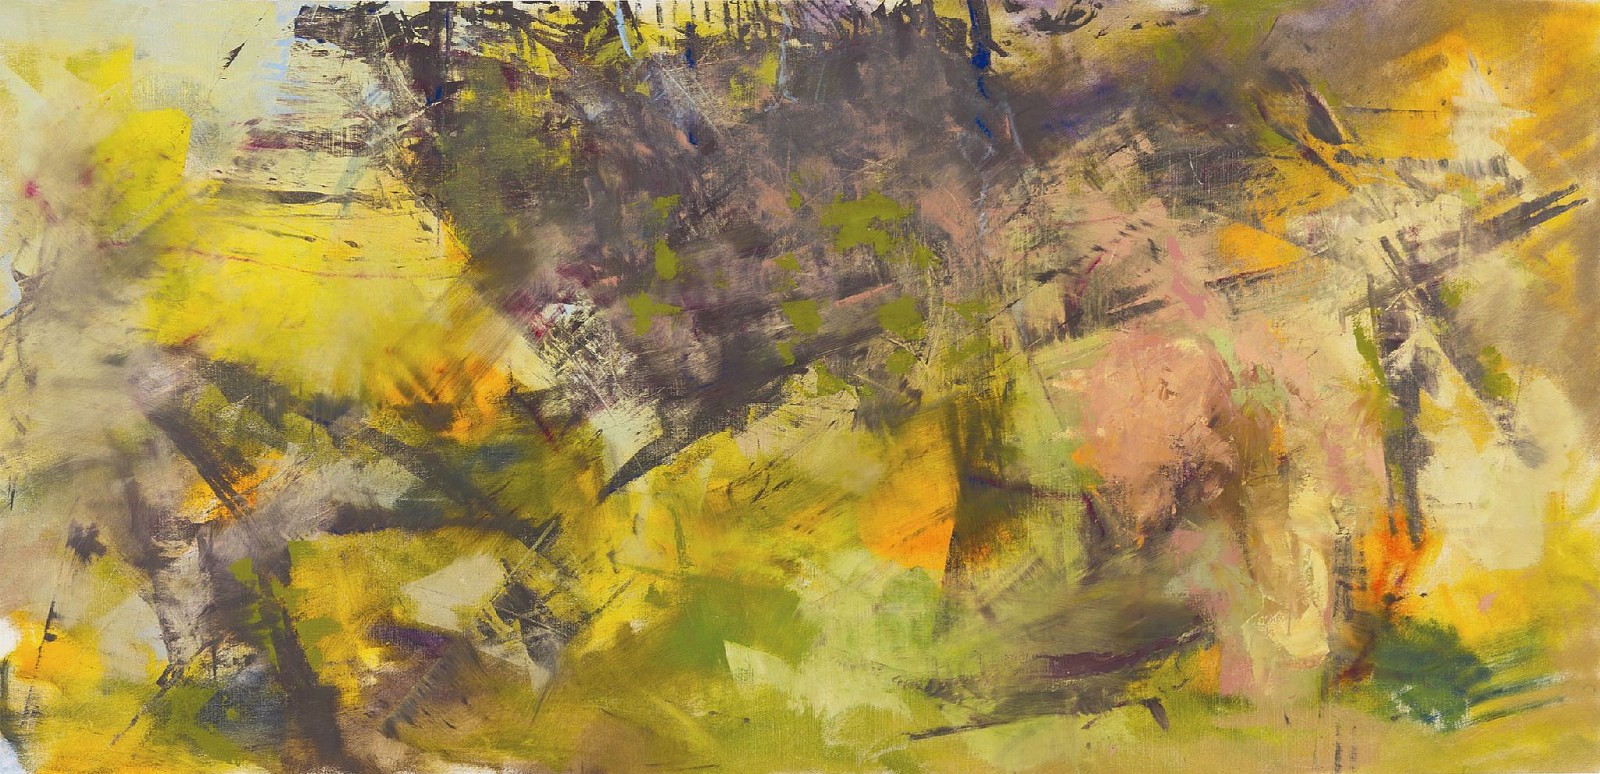 Beverly Barkat, #457
Oil on Canvas, 47 1/8 x 90 1/2 in.
BARK00012